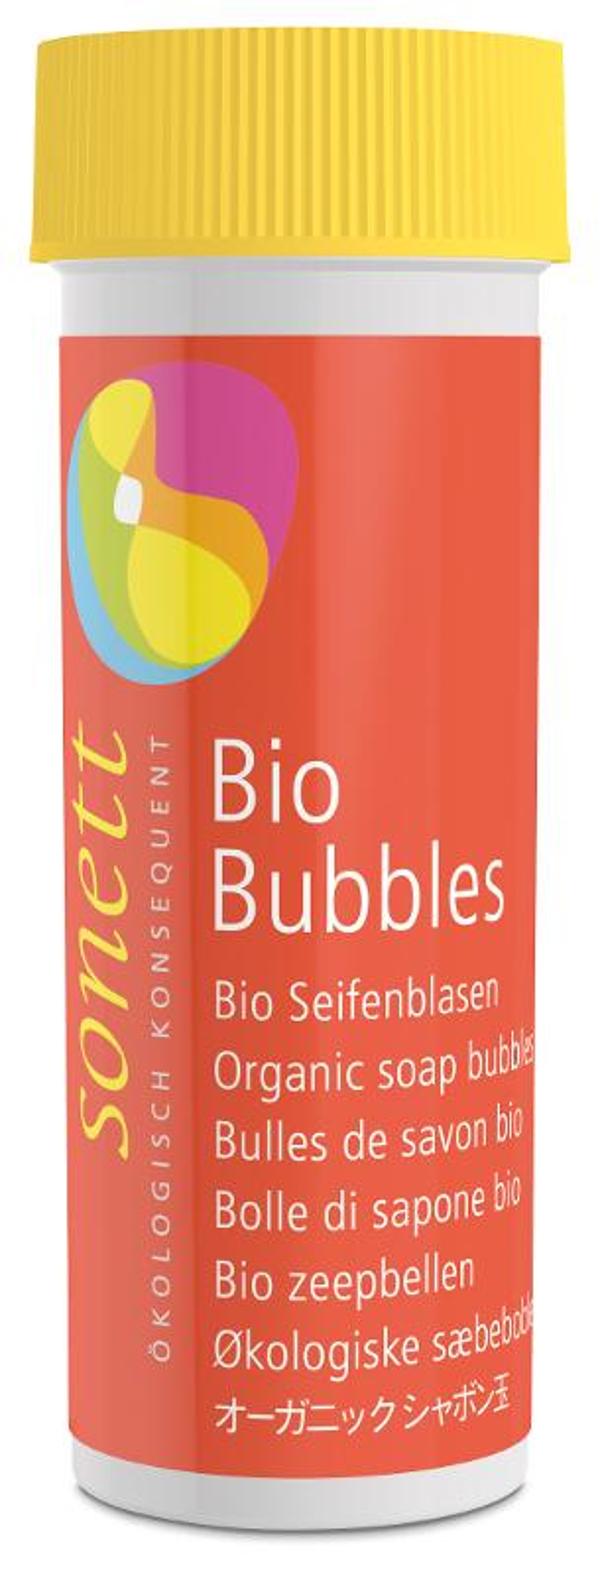 Produktfoto zu Bio Bubbles - Seifenblasen